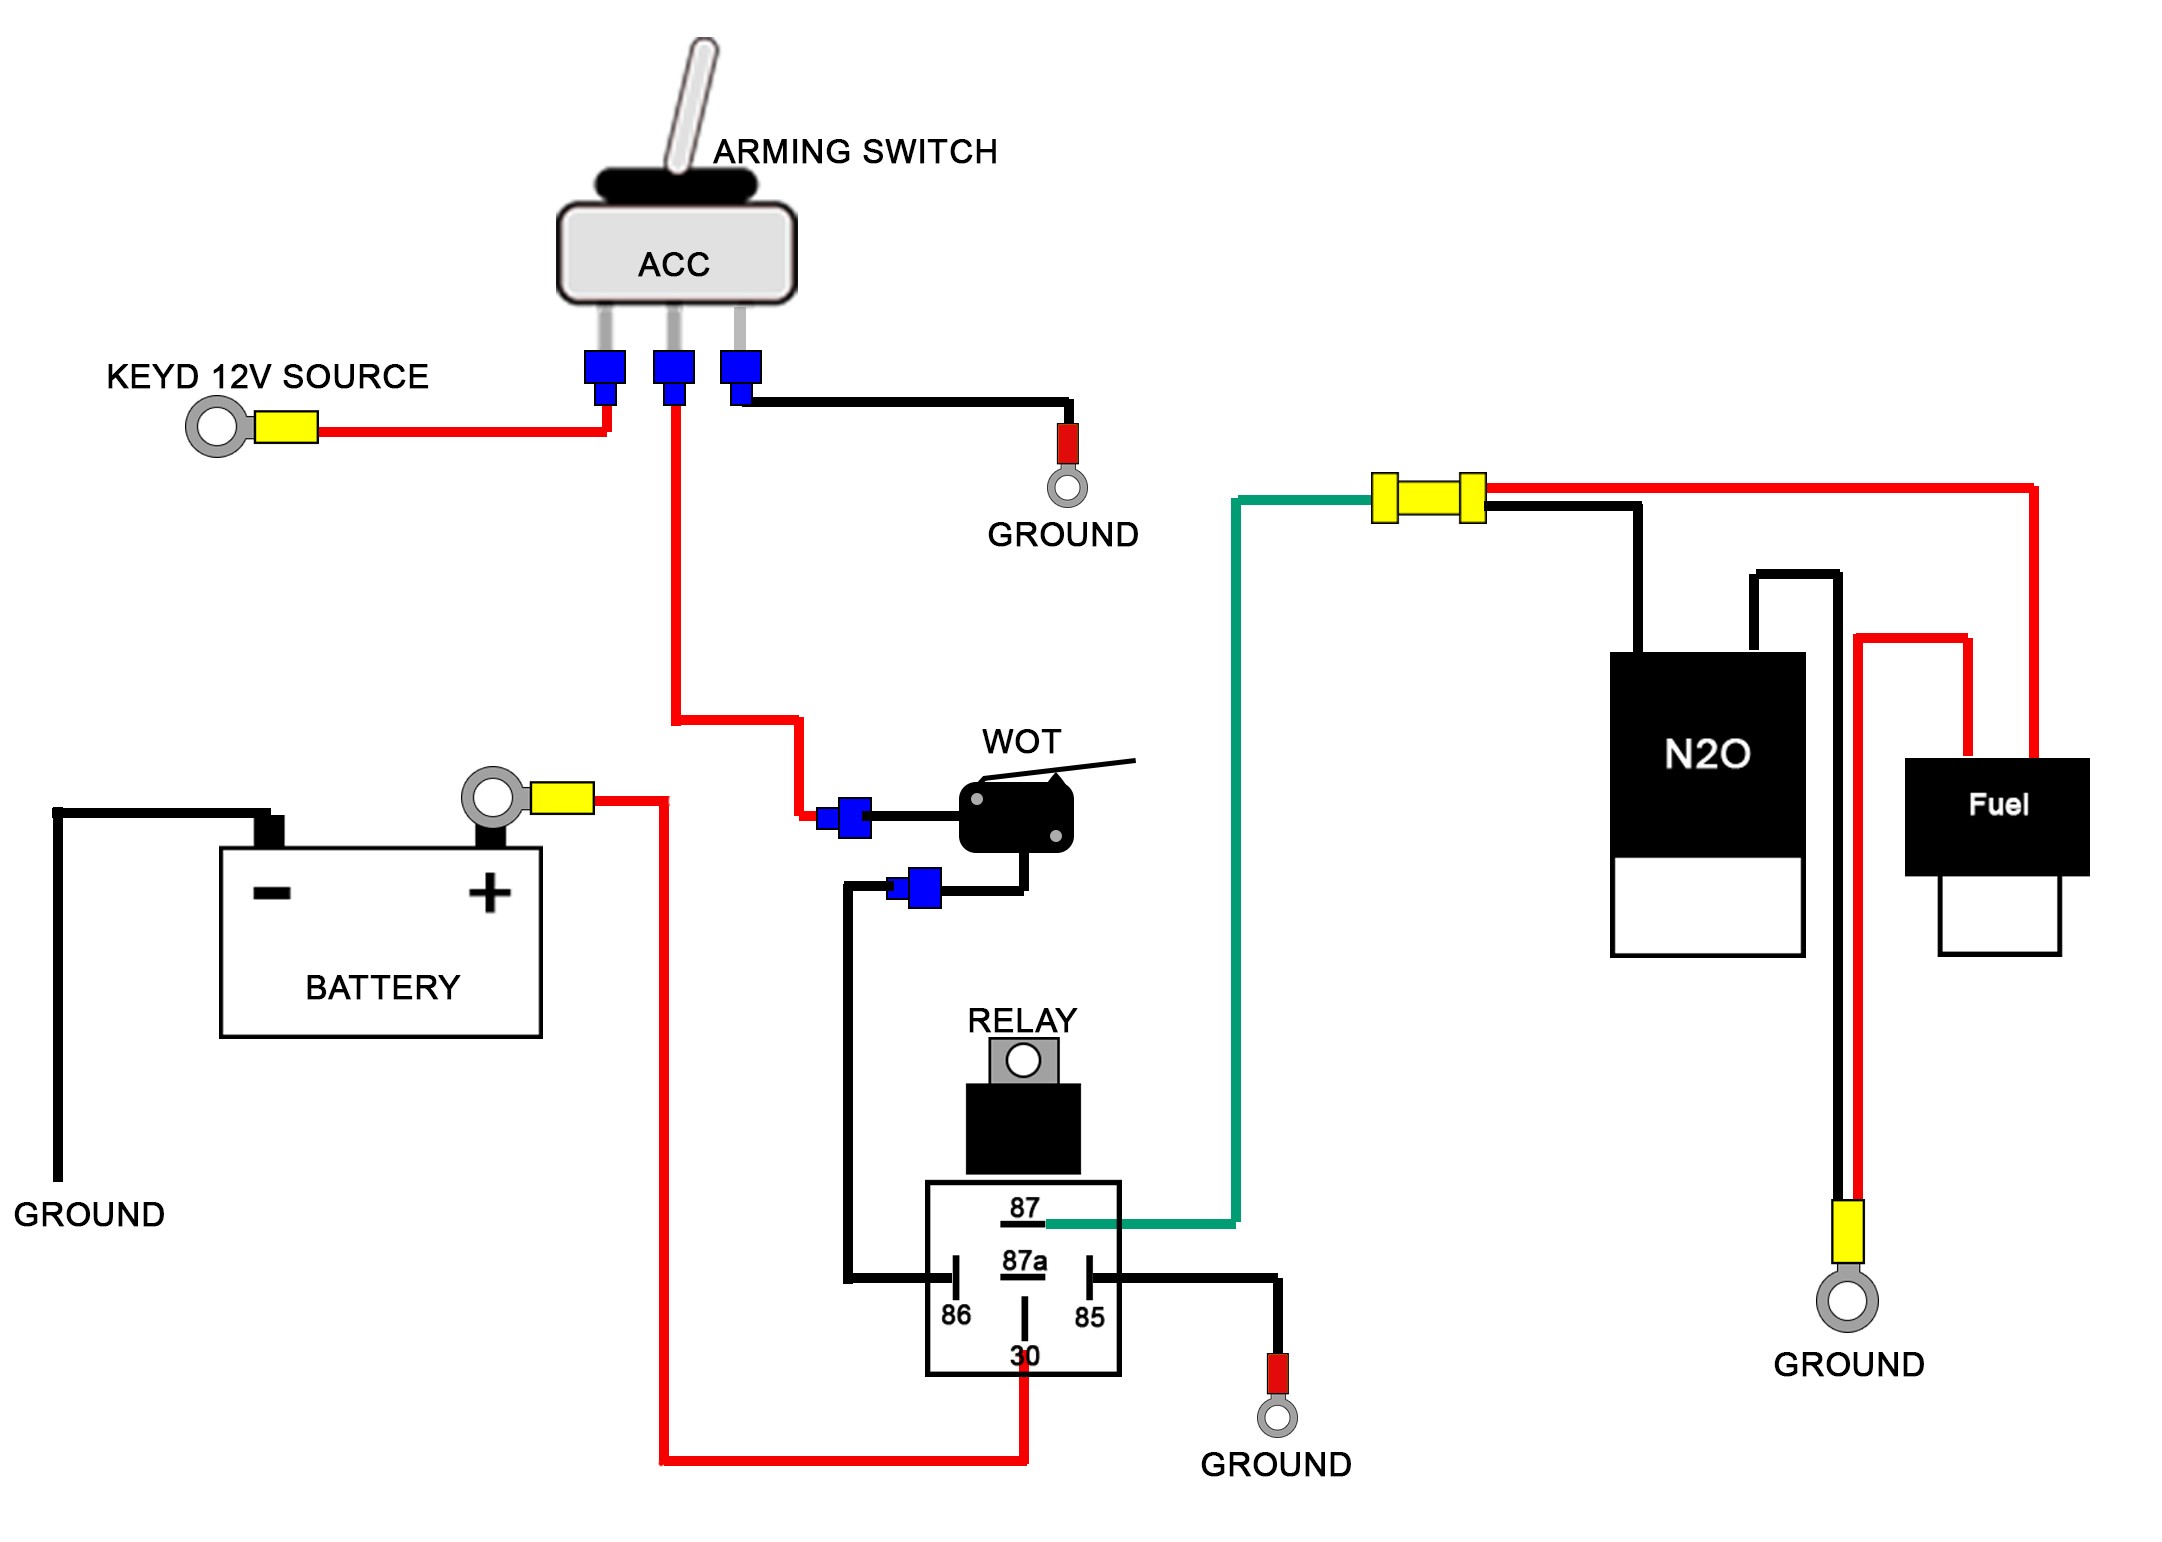 12v Switch Panel Wiring Diagram Wiring Diagrams Breaker Panel Wiring Diagram Relay Wiring Diagram Of 12v Switch Panel Wiring Diagram